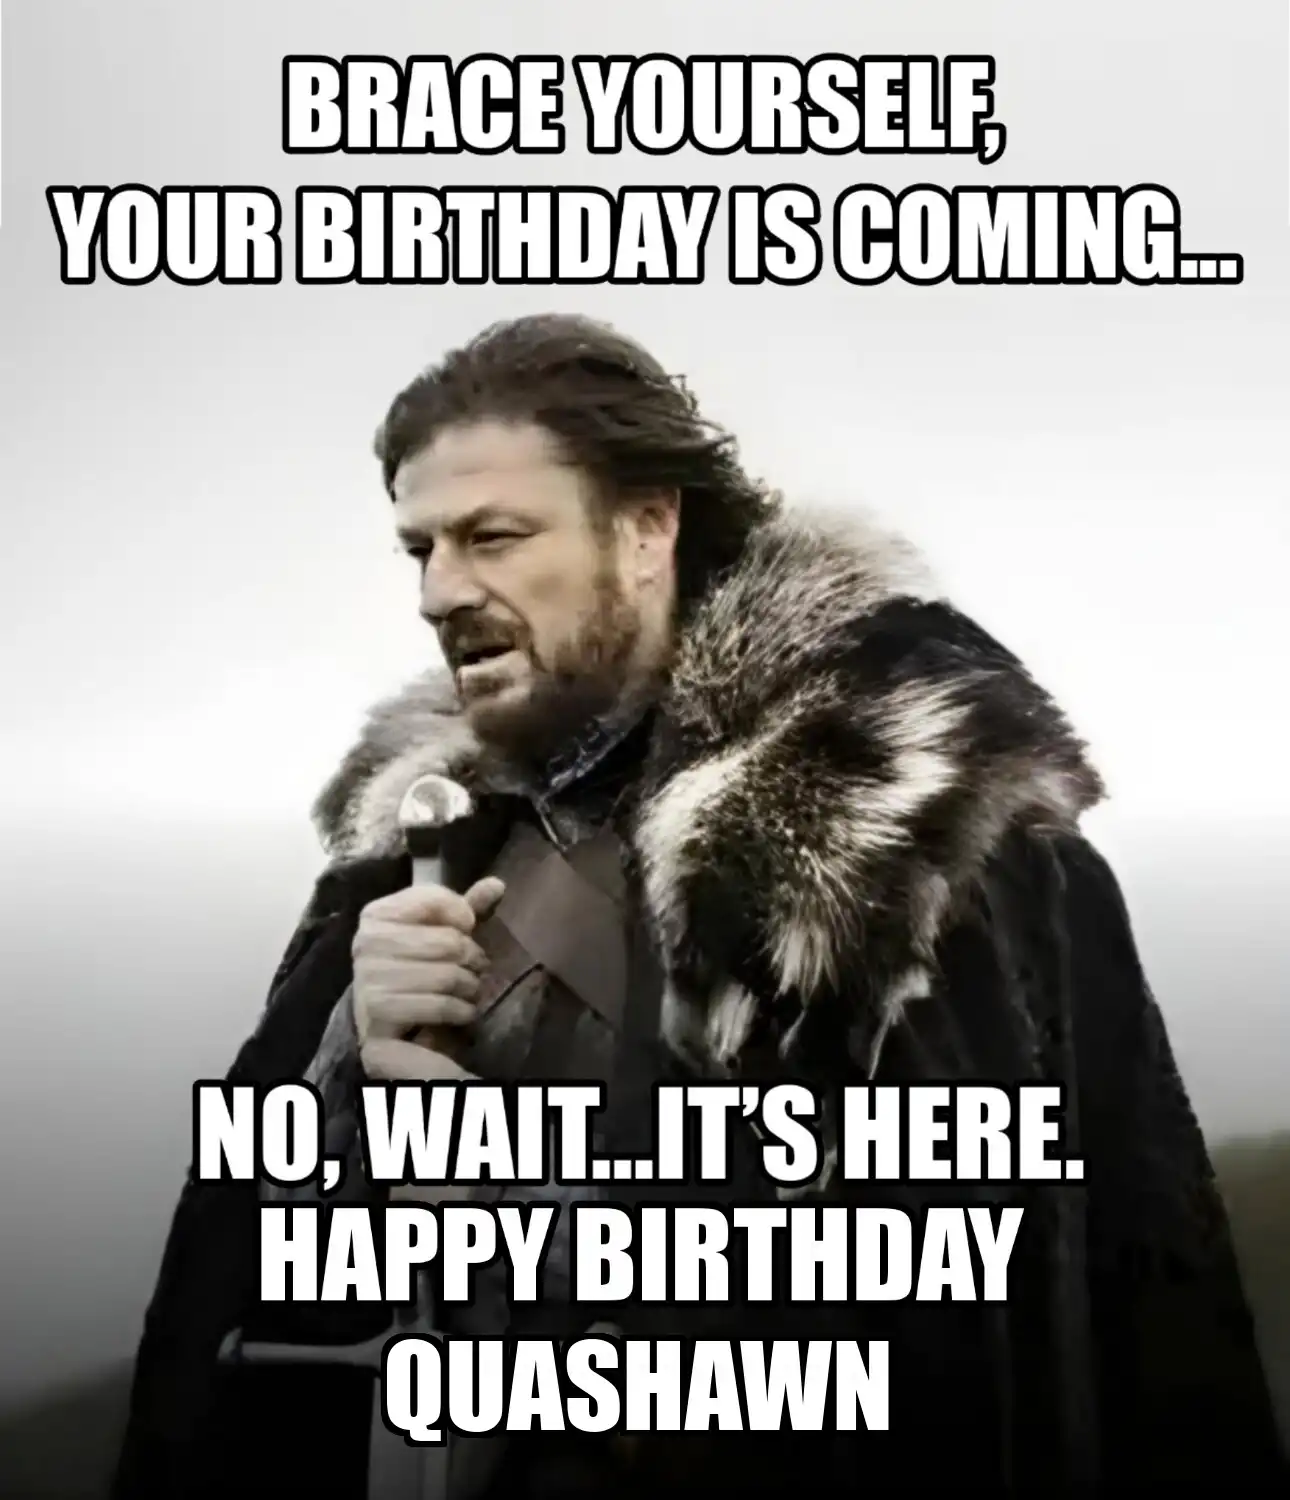 Happy Birthday Quashawn Brace Yourself Your Birthday Is Coming Meme